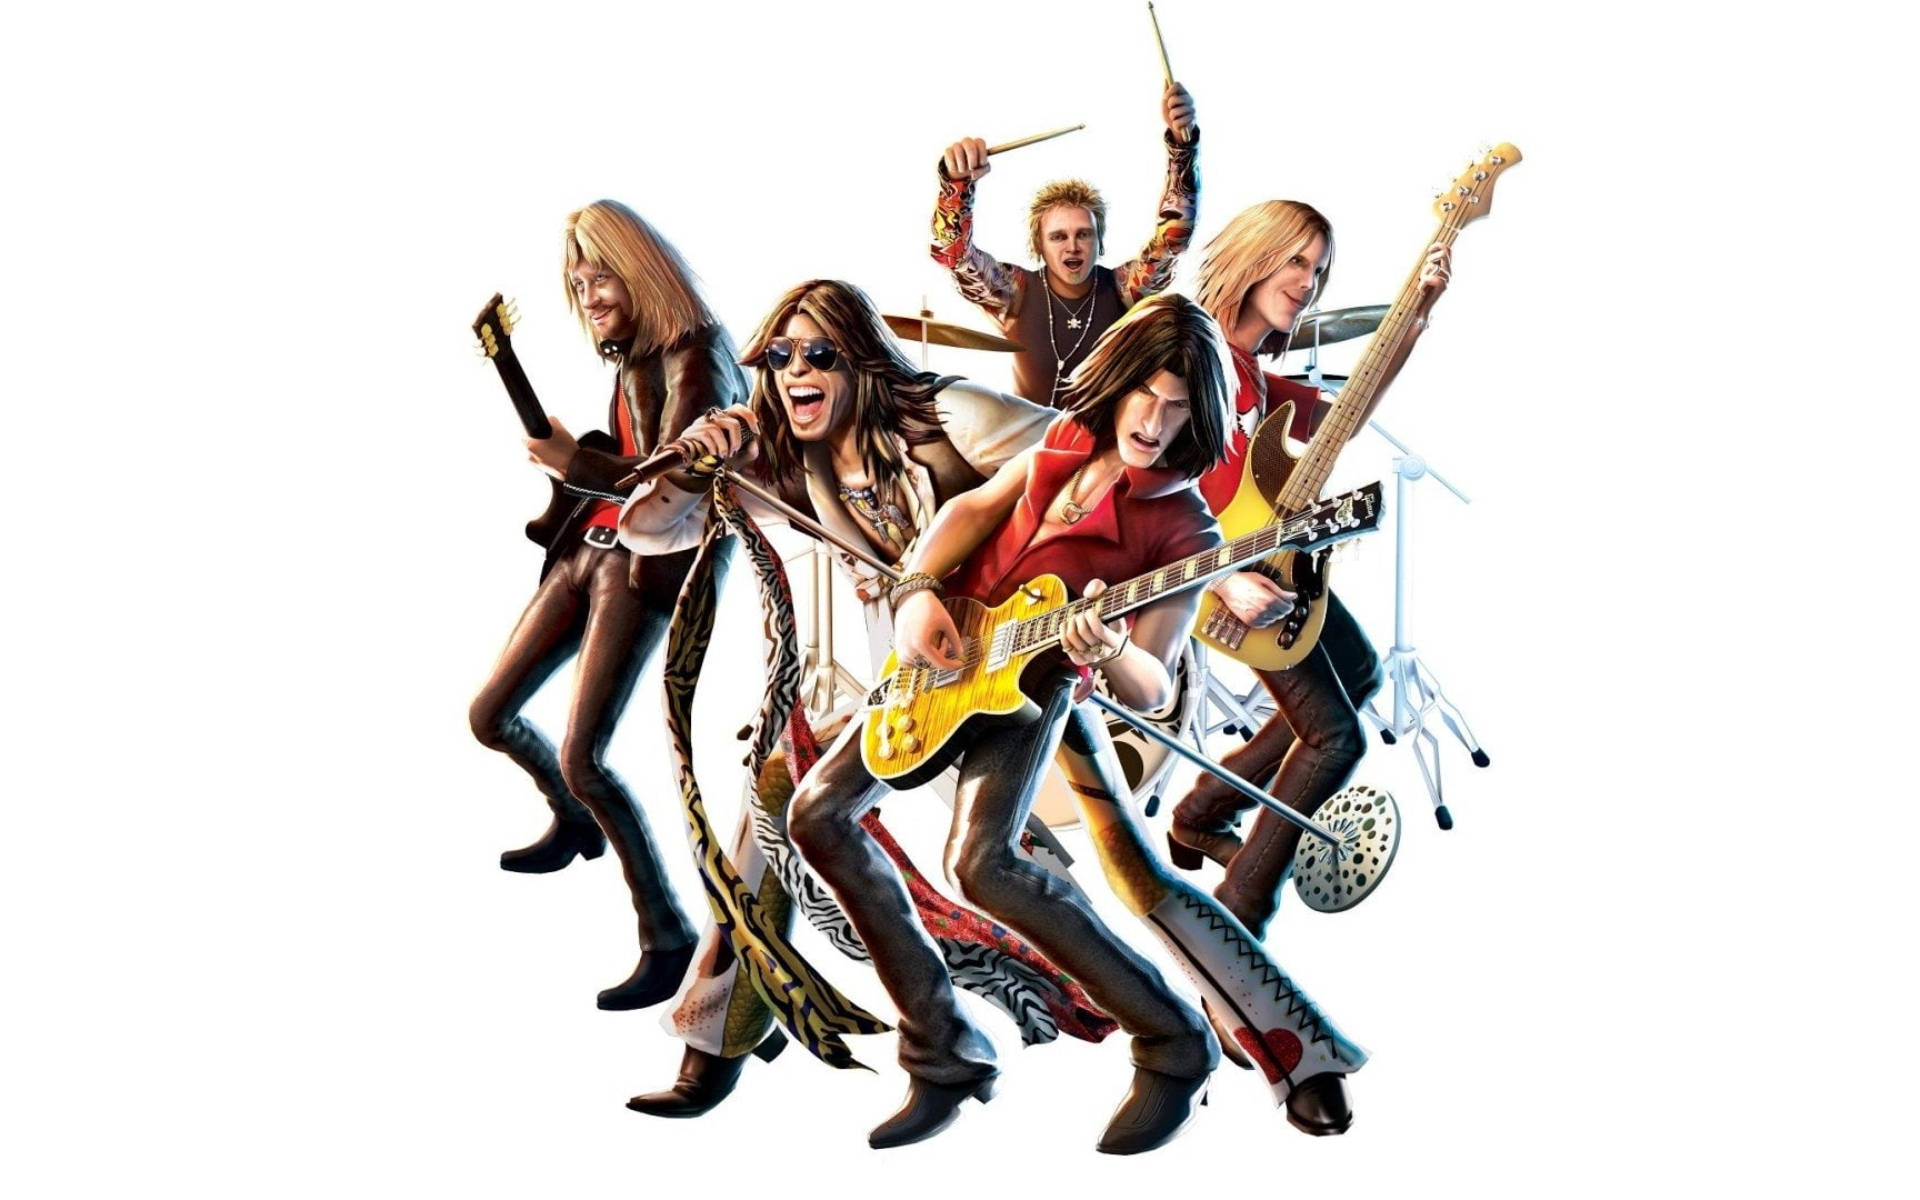 Guitar Hero Aerosmith Band Wallpaper